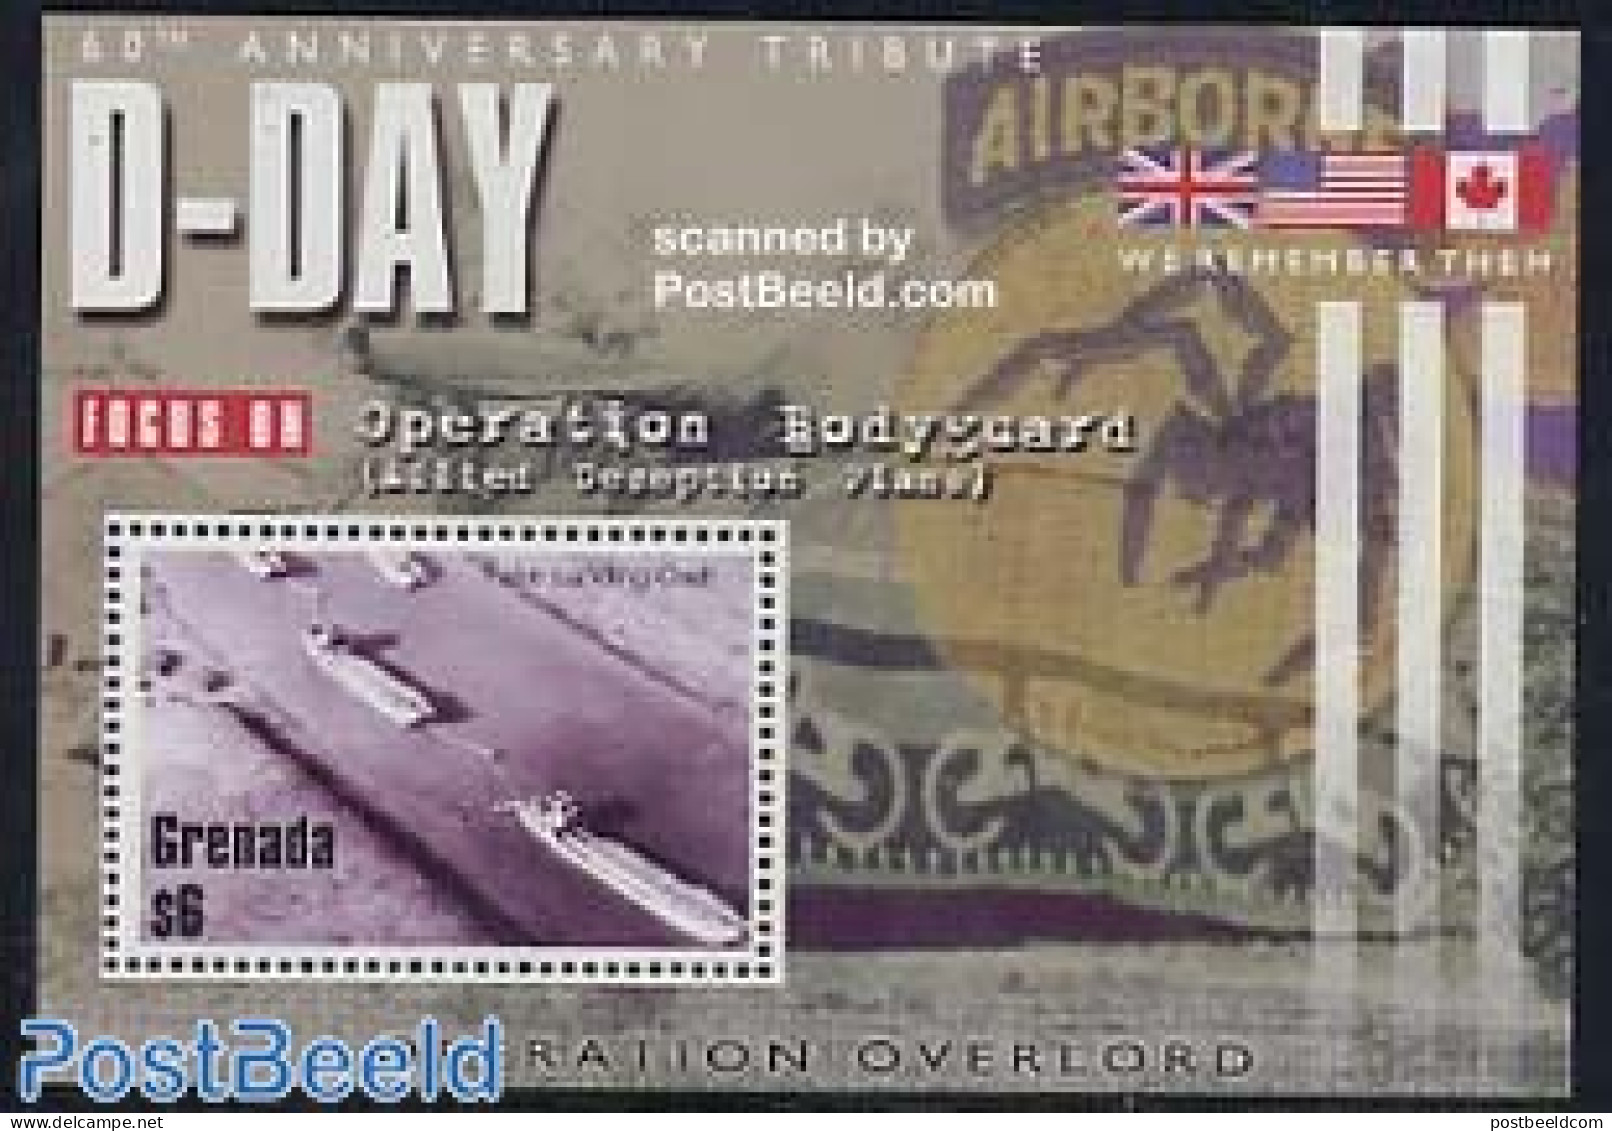 Grenada 2004 D-Day S/s, Fake Landing Craft, Mint NH, History - Transport - Militarism - World War II - Ships And Boats - Militaria